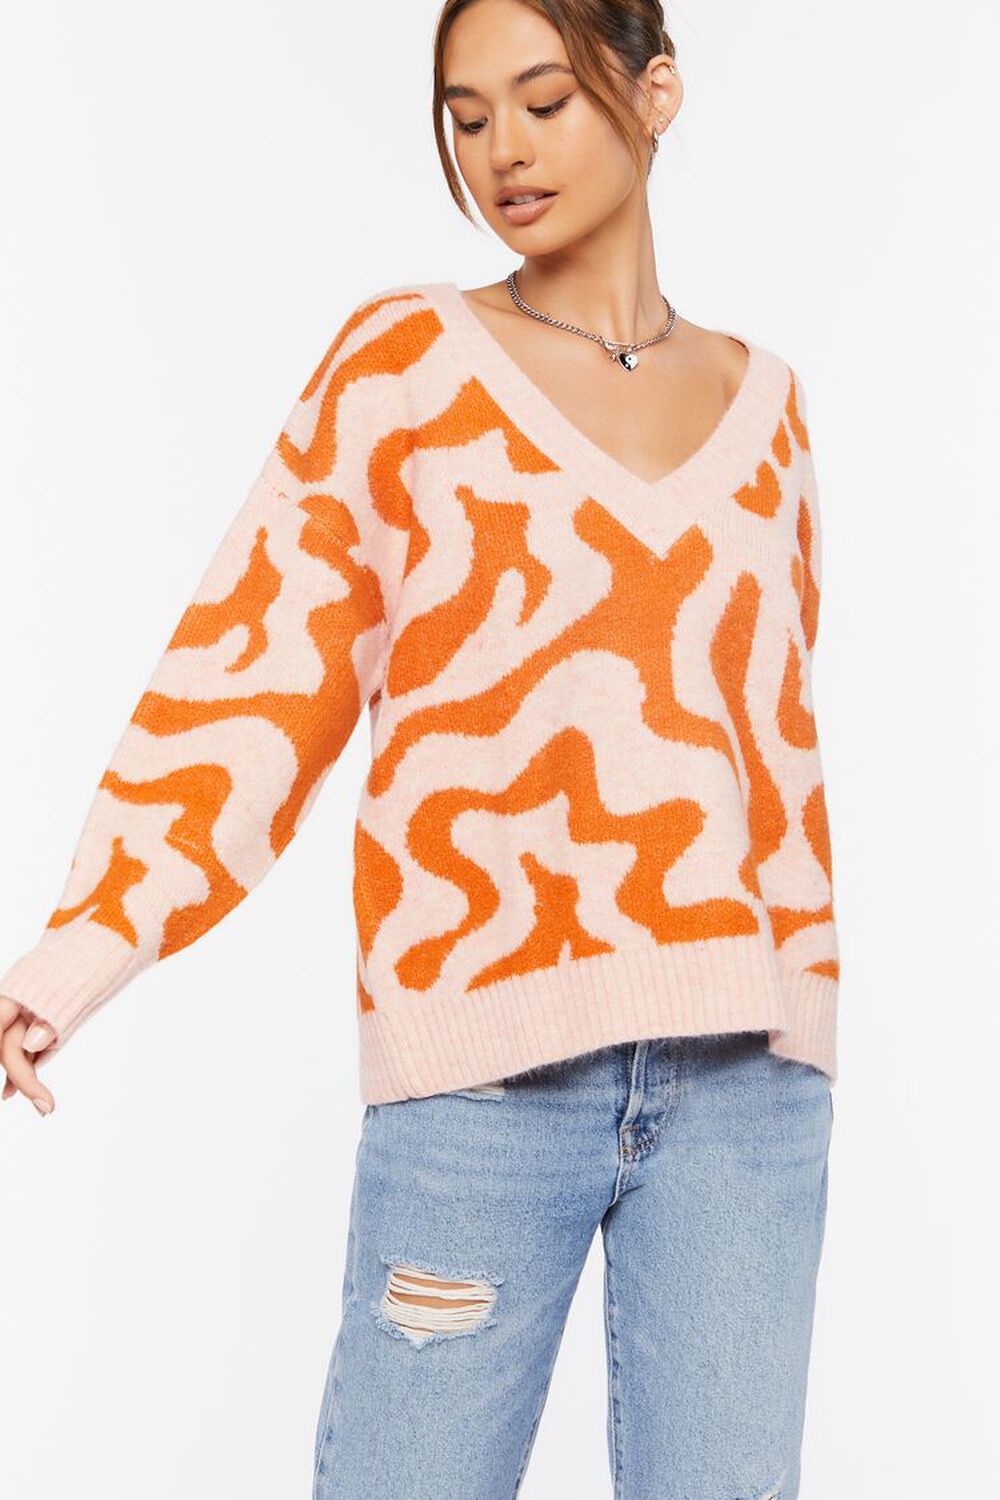 PINK/ORANGE Abstract Print V-Neck Sweater, image 1